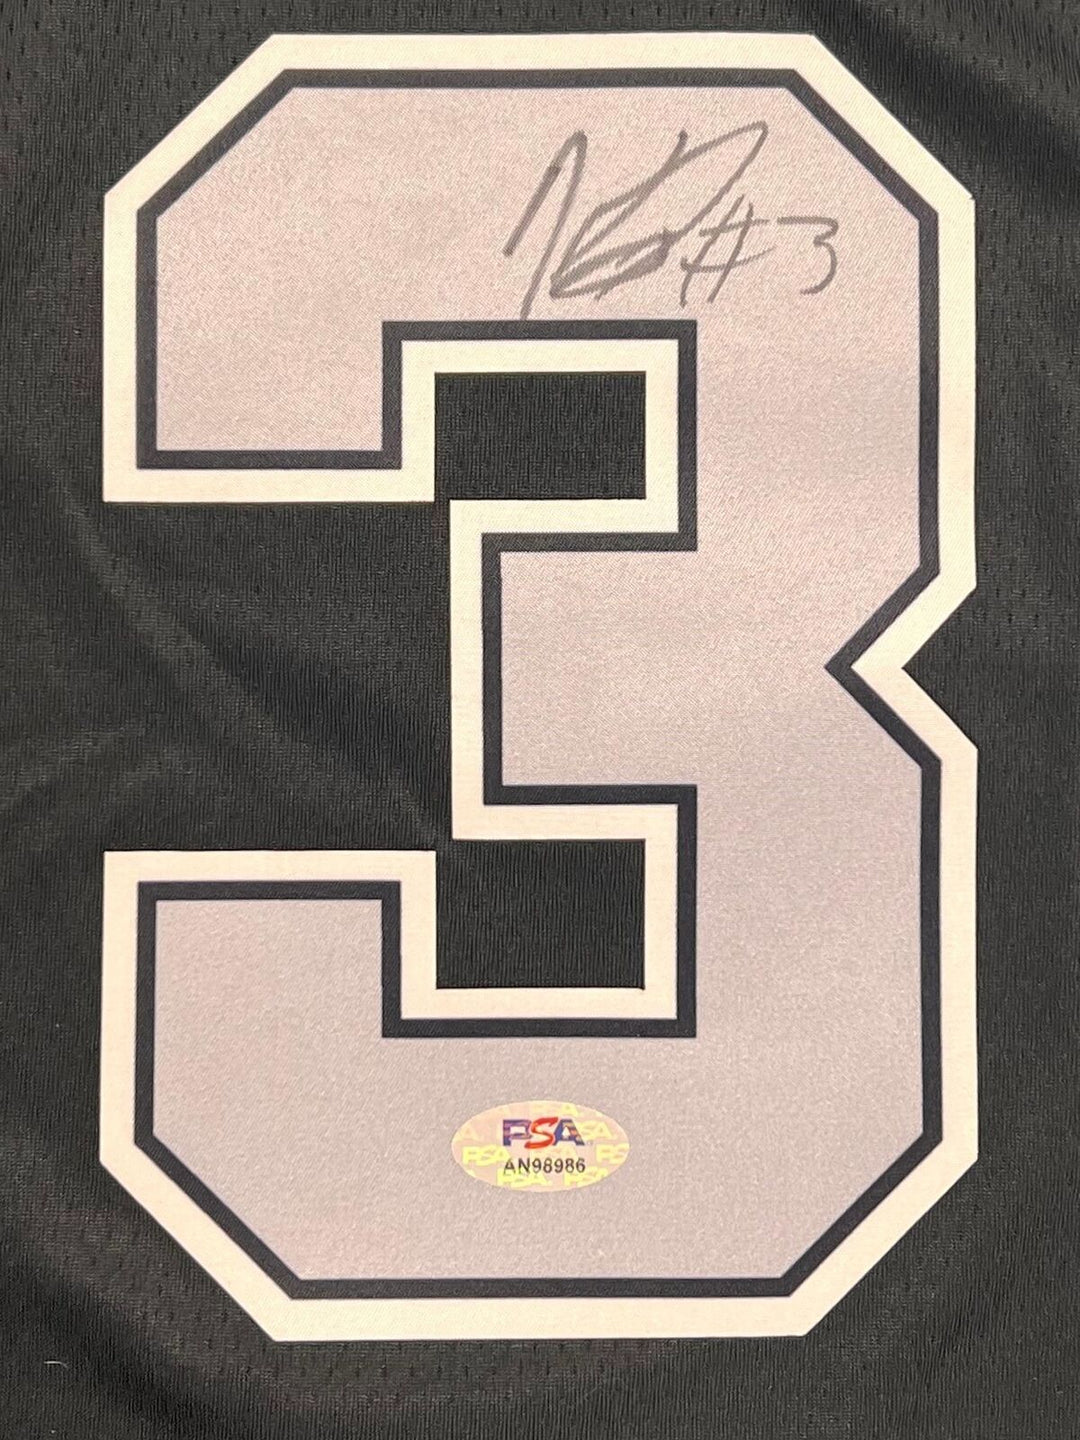 Keldon Johnson signed jersey PSA San Antonio Spurs Autographed Image 2